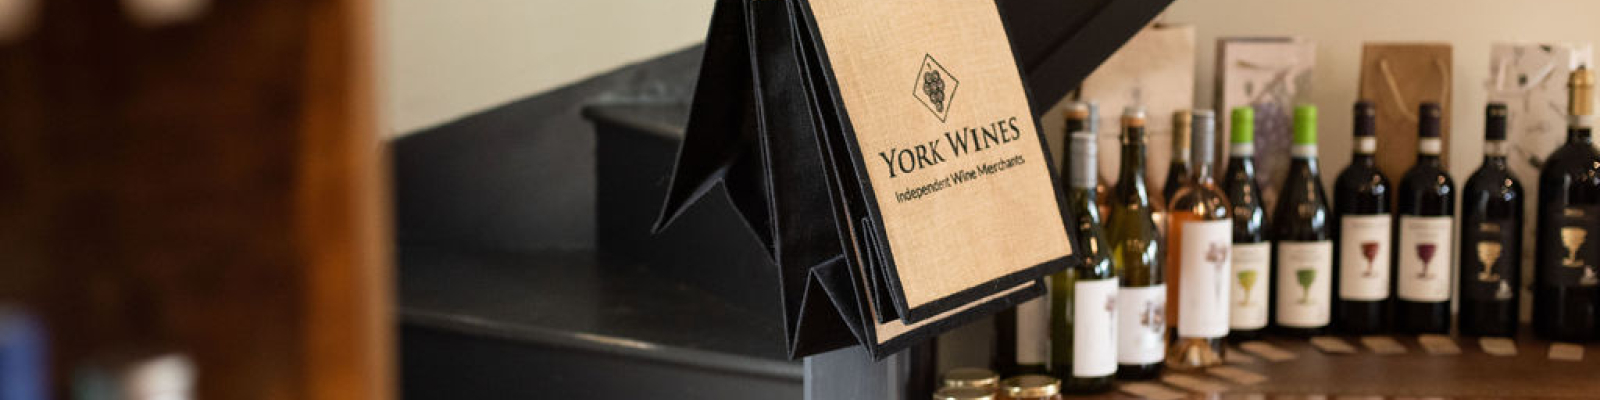 York Wines bag on shop floor staircase